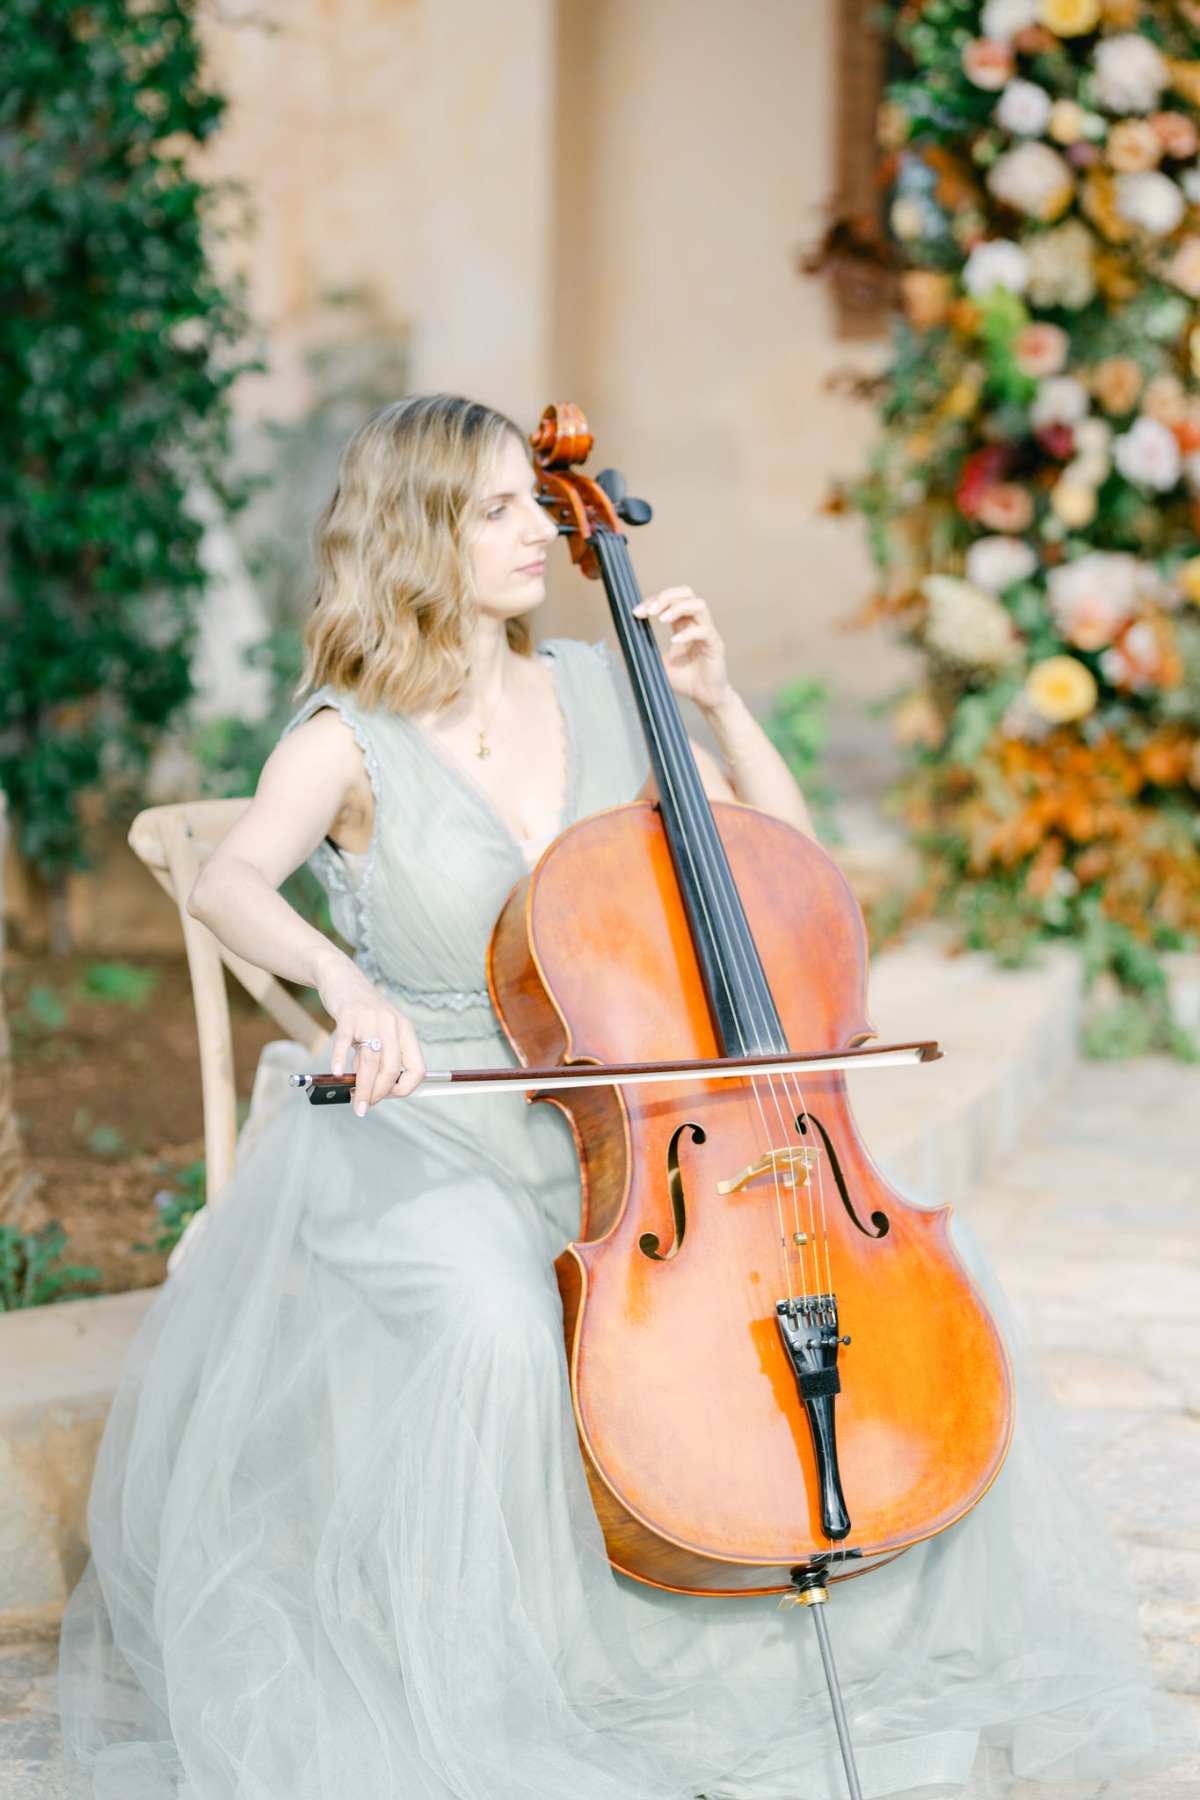 Cello player for destination weddings in Athens, Greece